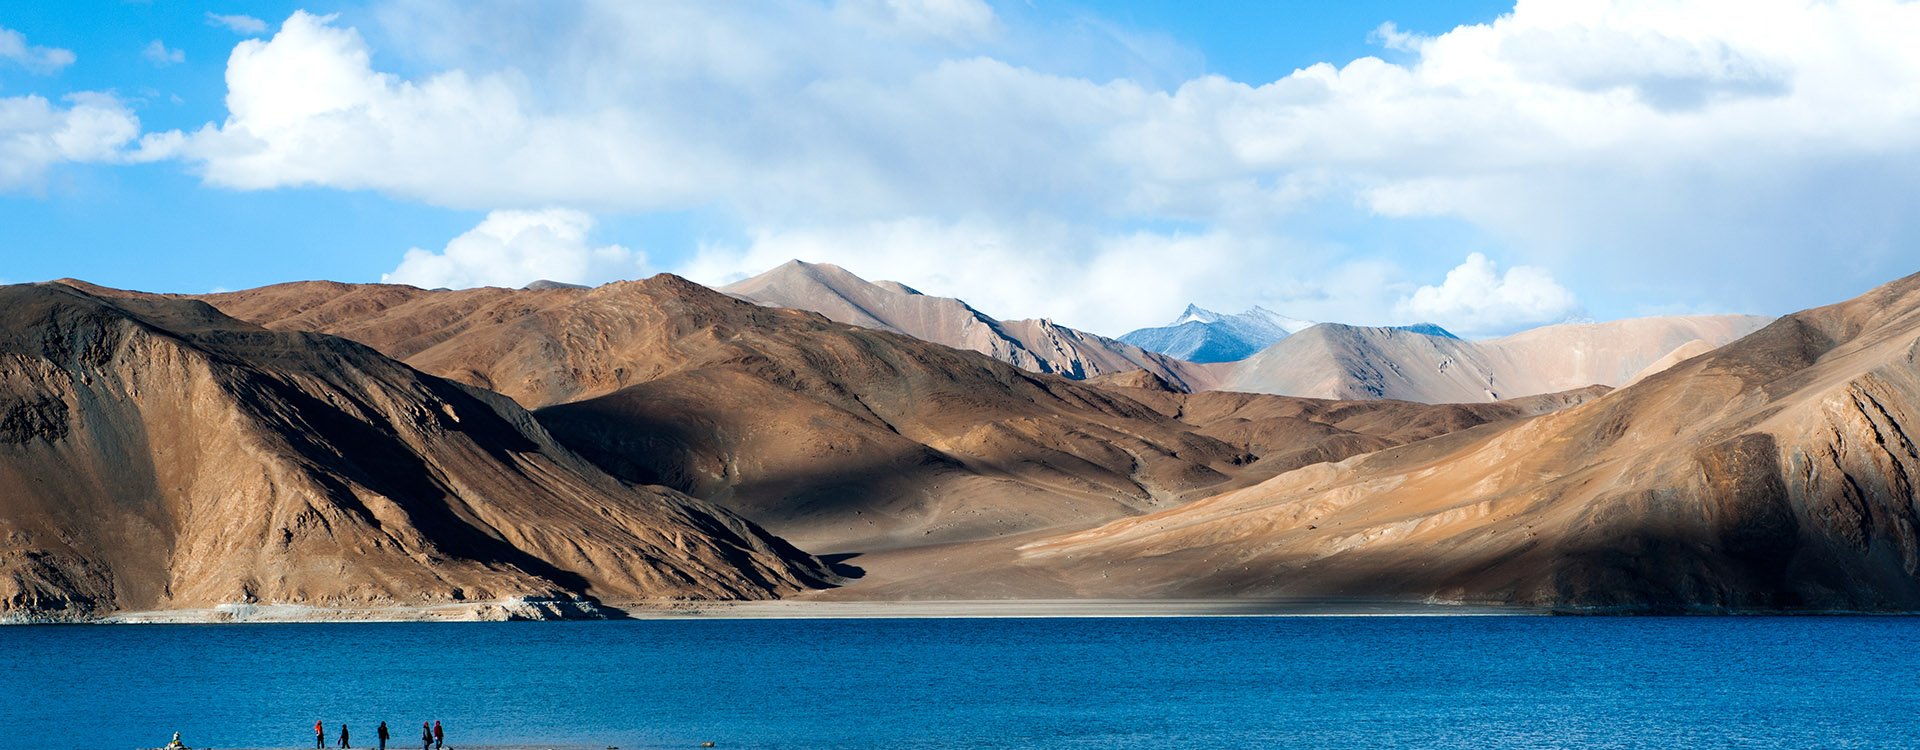 Pangong Lake Tso Lake in Leh Ladakh, Northern India